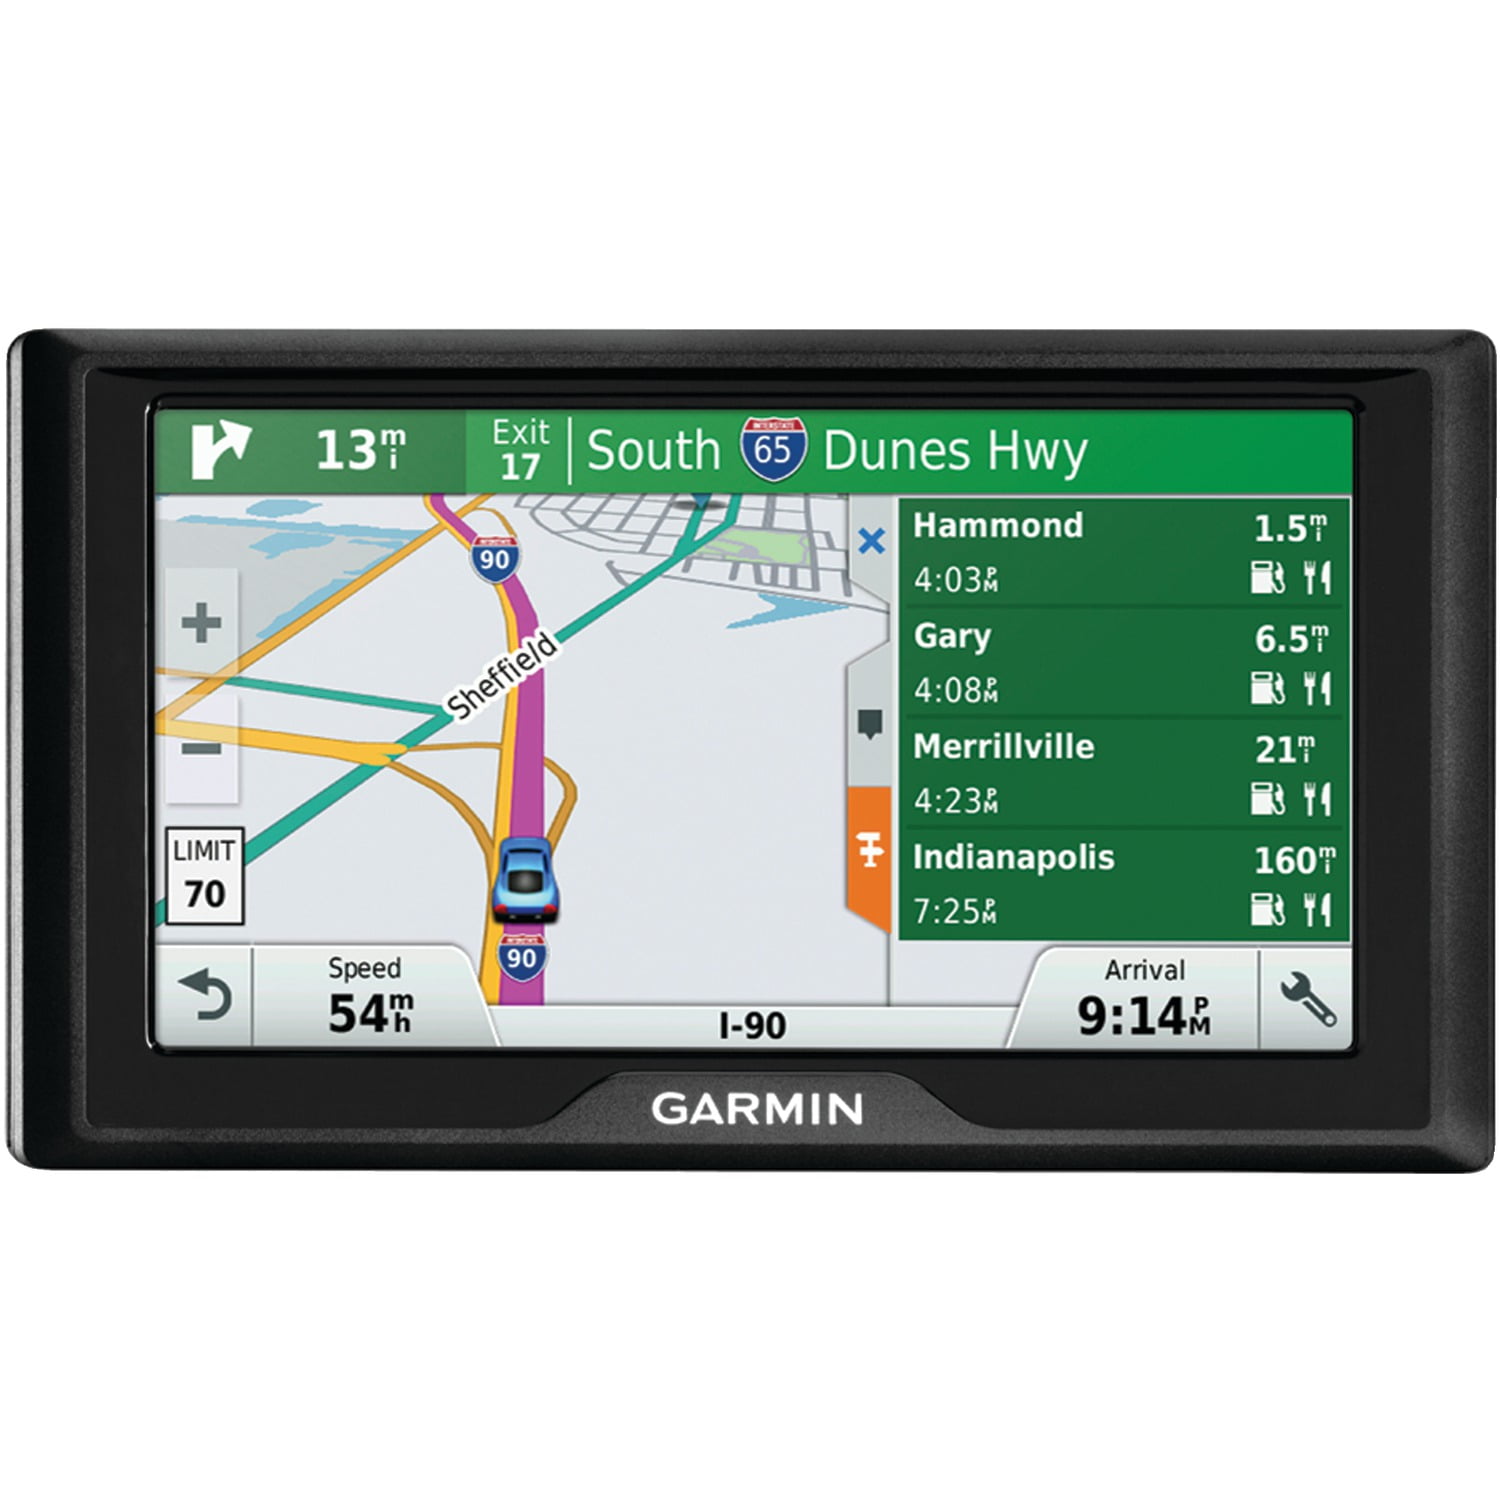 Drive 60 6" GPSps Navigator (with Free Lifetime Maps for the US) - Walmart.com